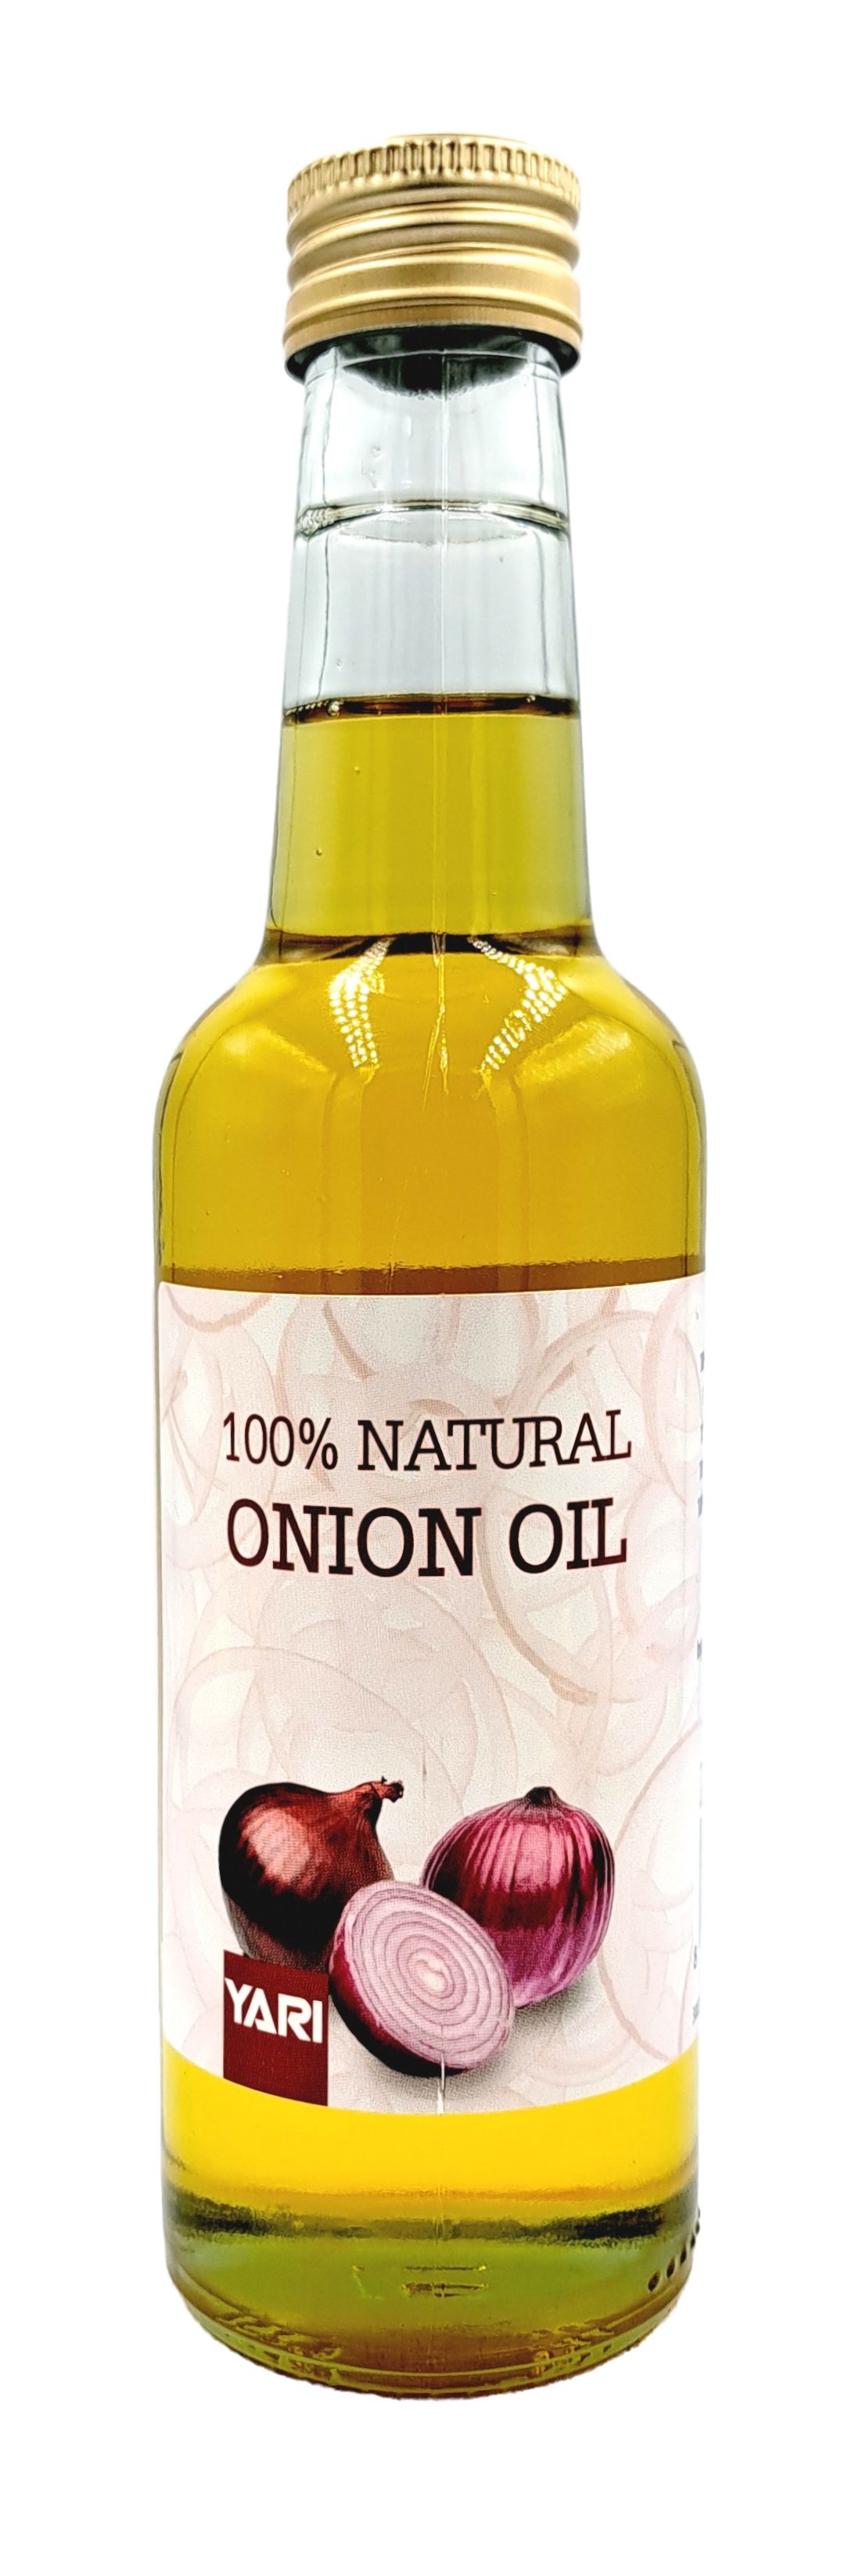 Haaröl 1-tlg. Onion Natural Yari 1, 100% 250ml, Oil Yari Zwiebelöl -